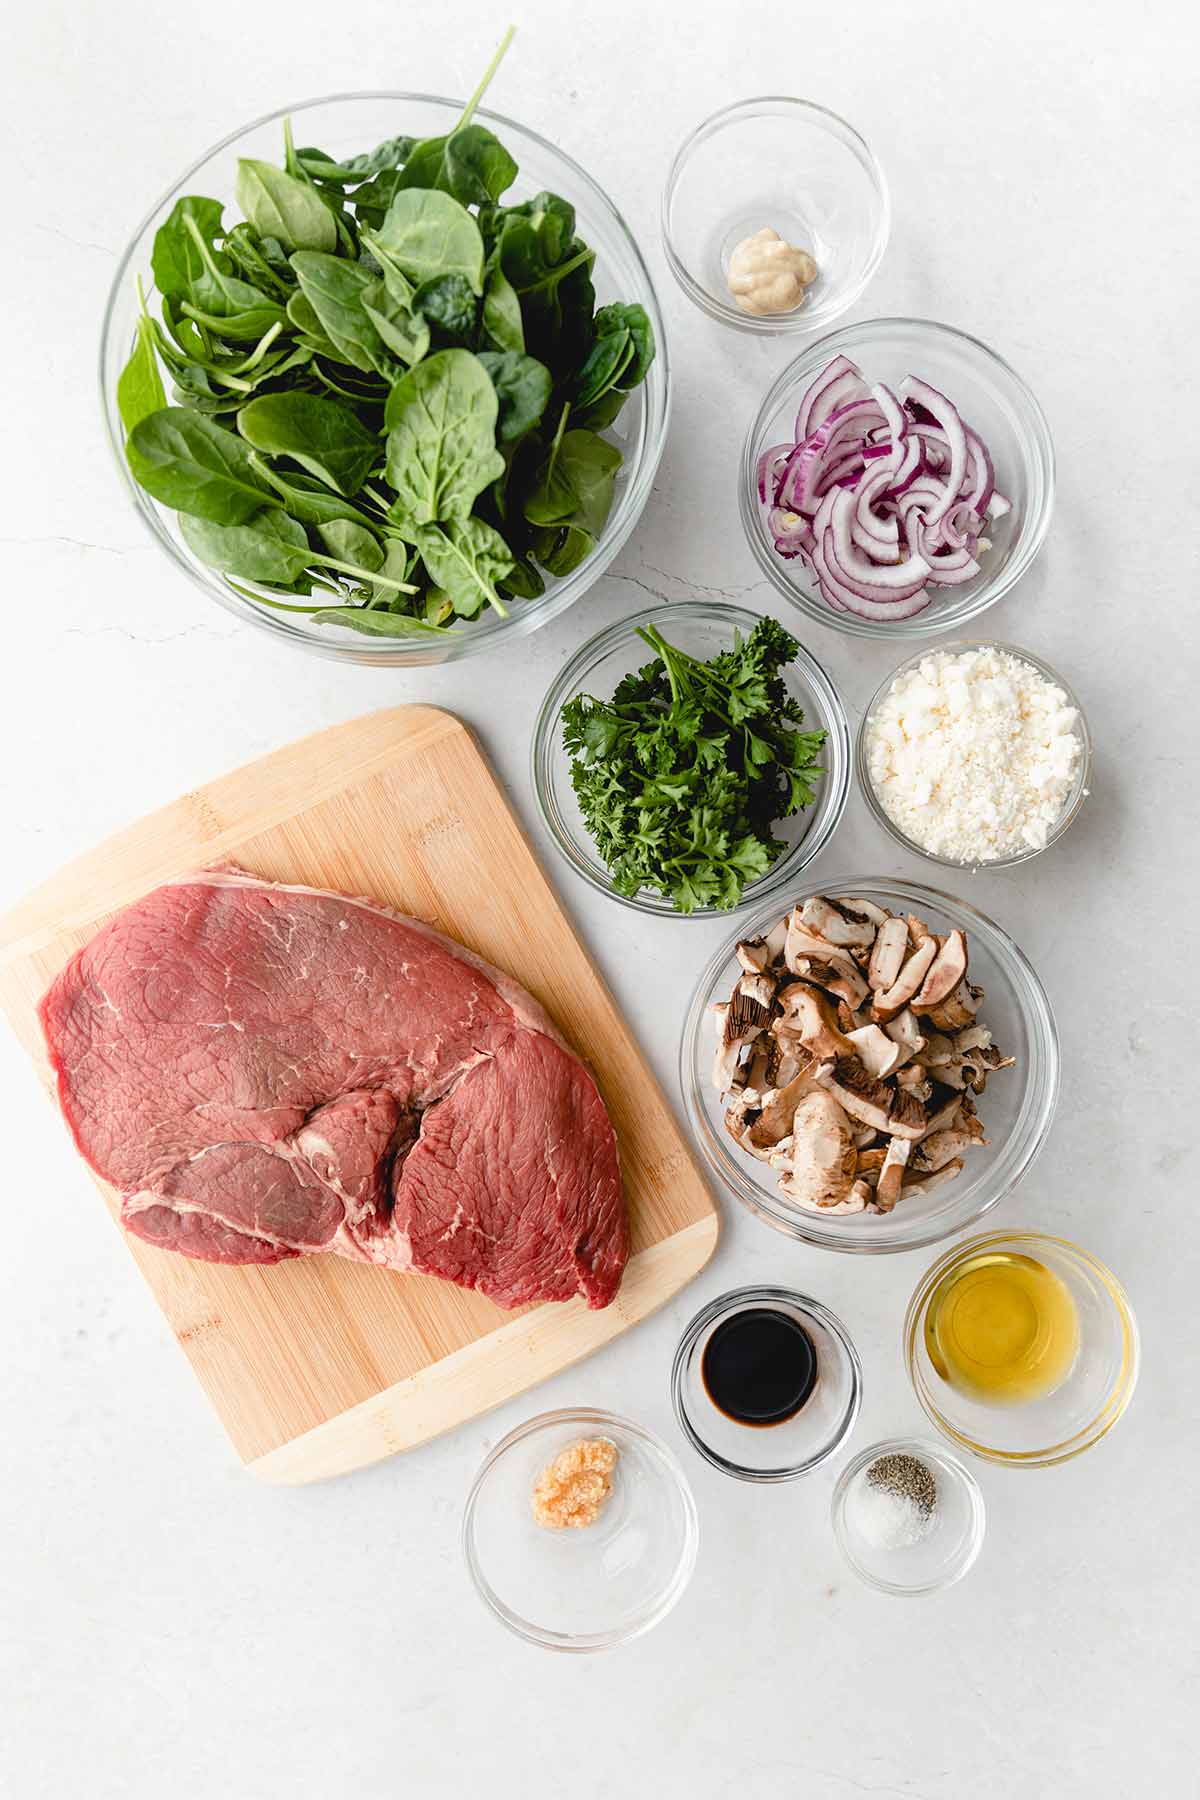 Ingredients for steak salad.